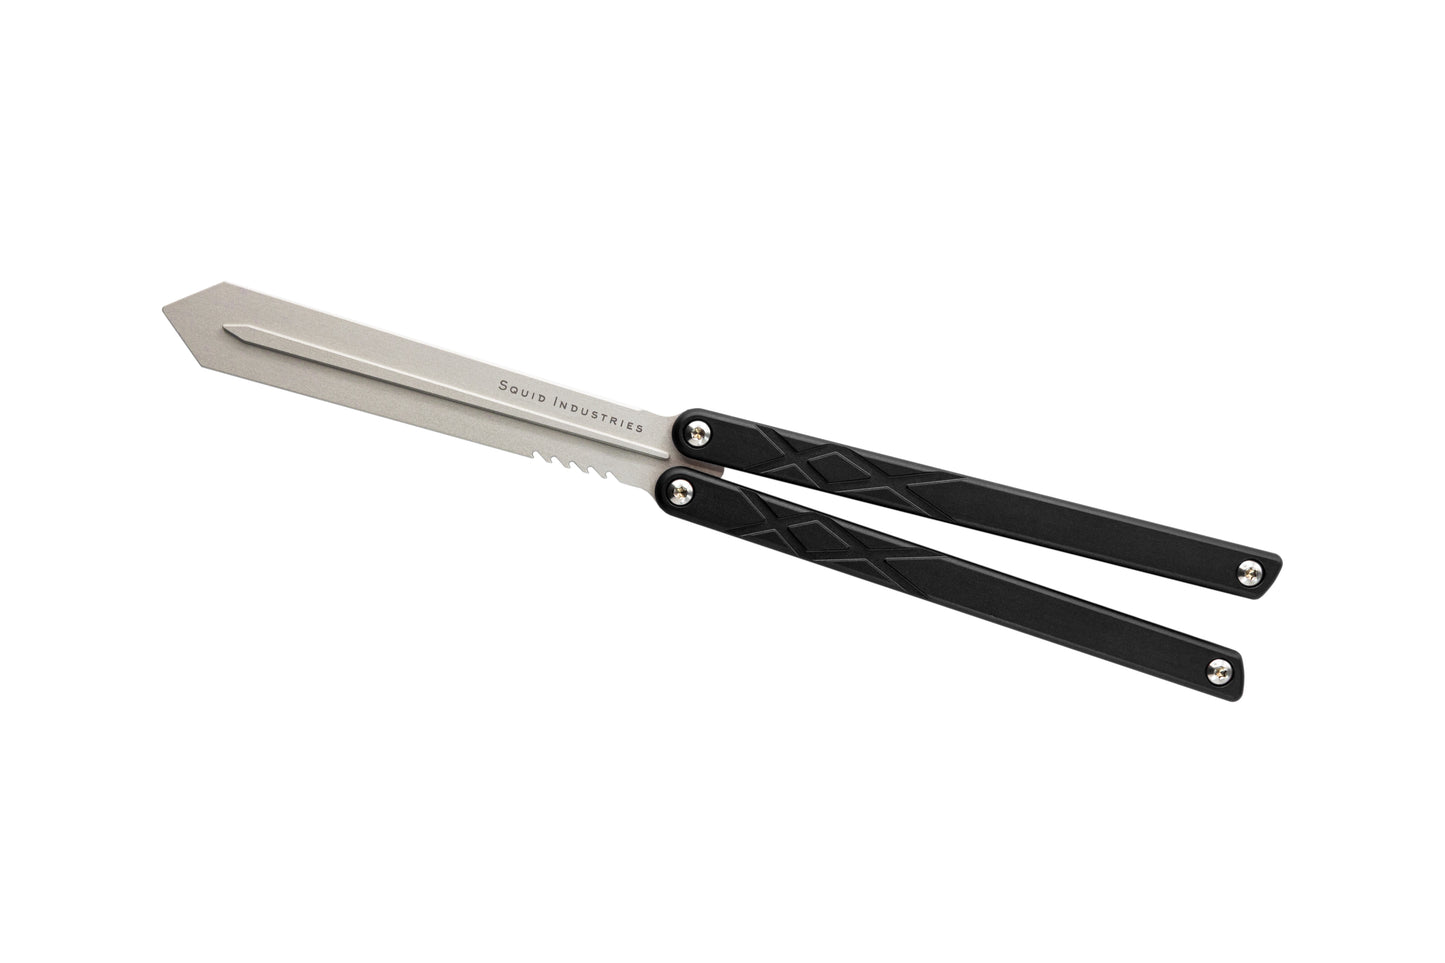 silver blade black handles silver hardware swordfish balisosng butterfly knife trainer fidget toy